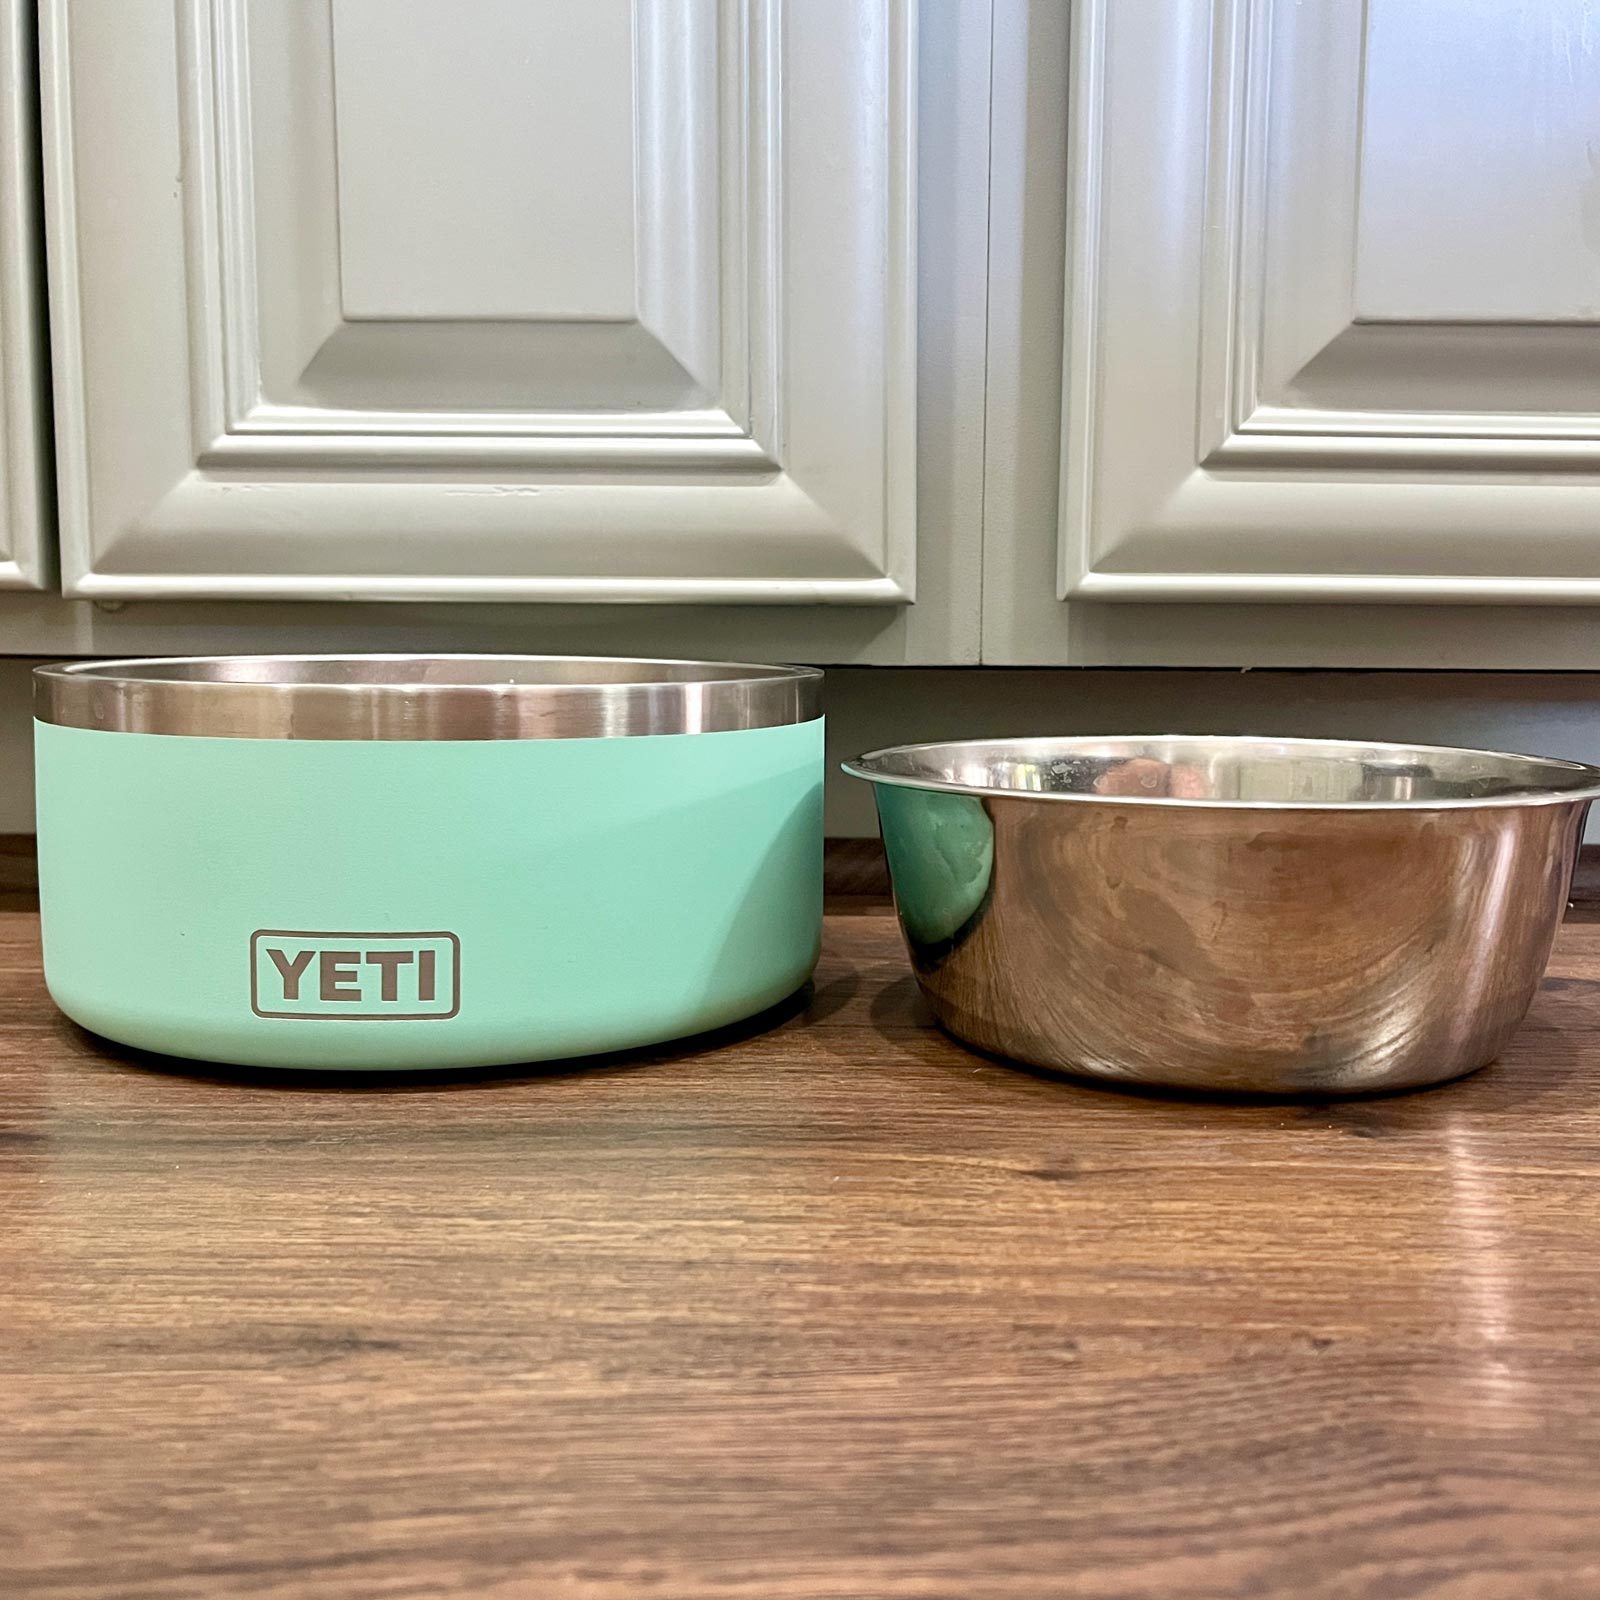 Yeti Boomer Dog Bowl - Is It Worth the Money?